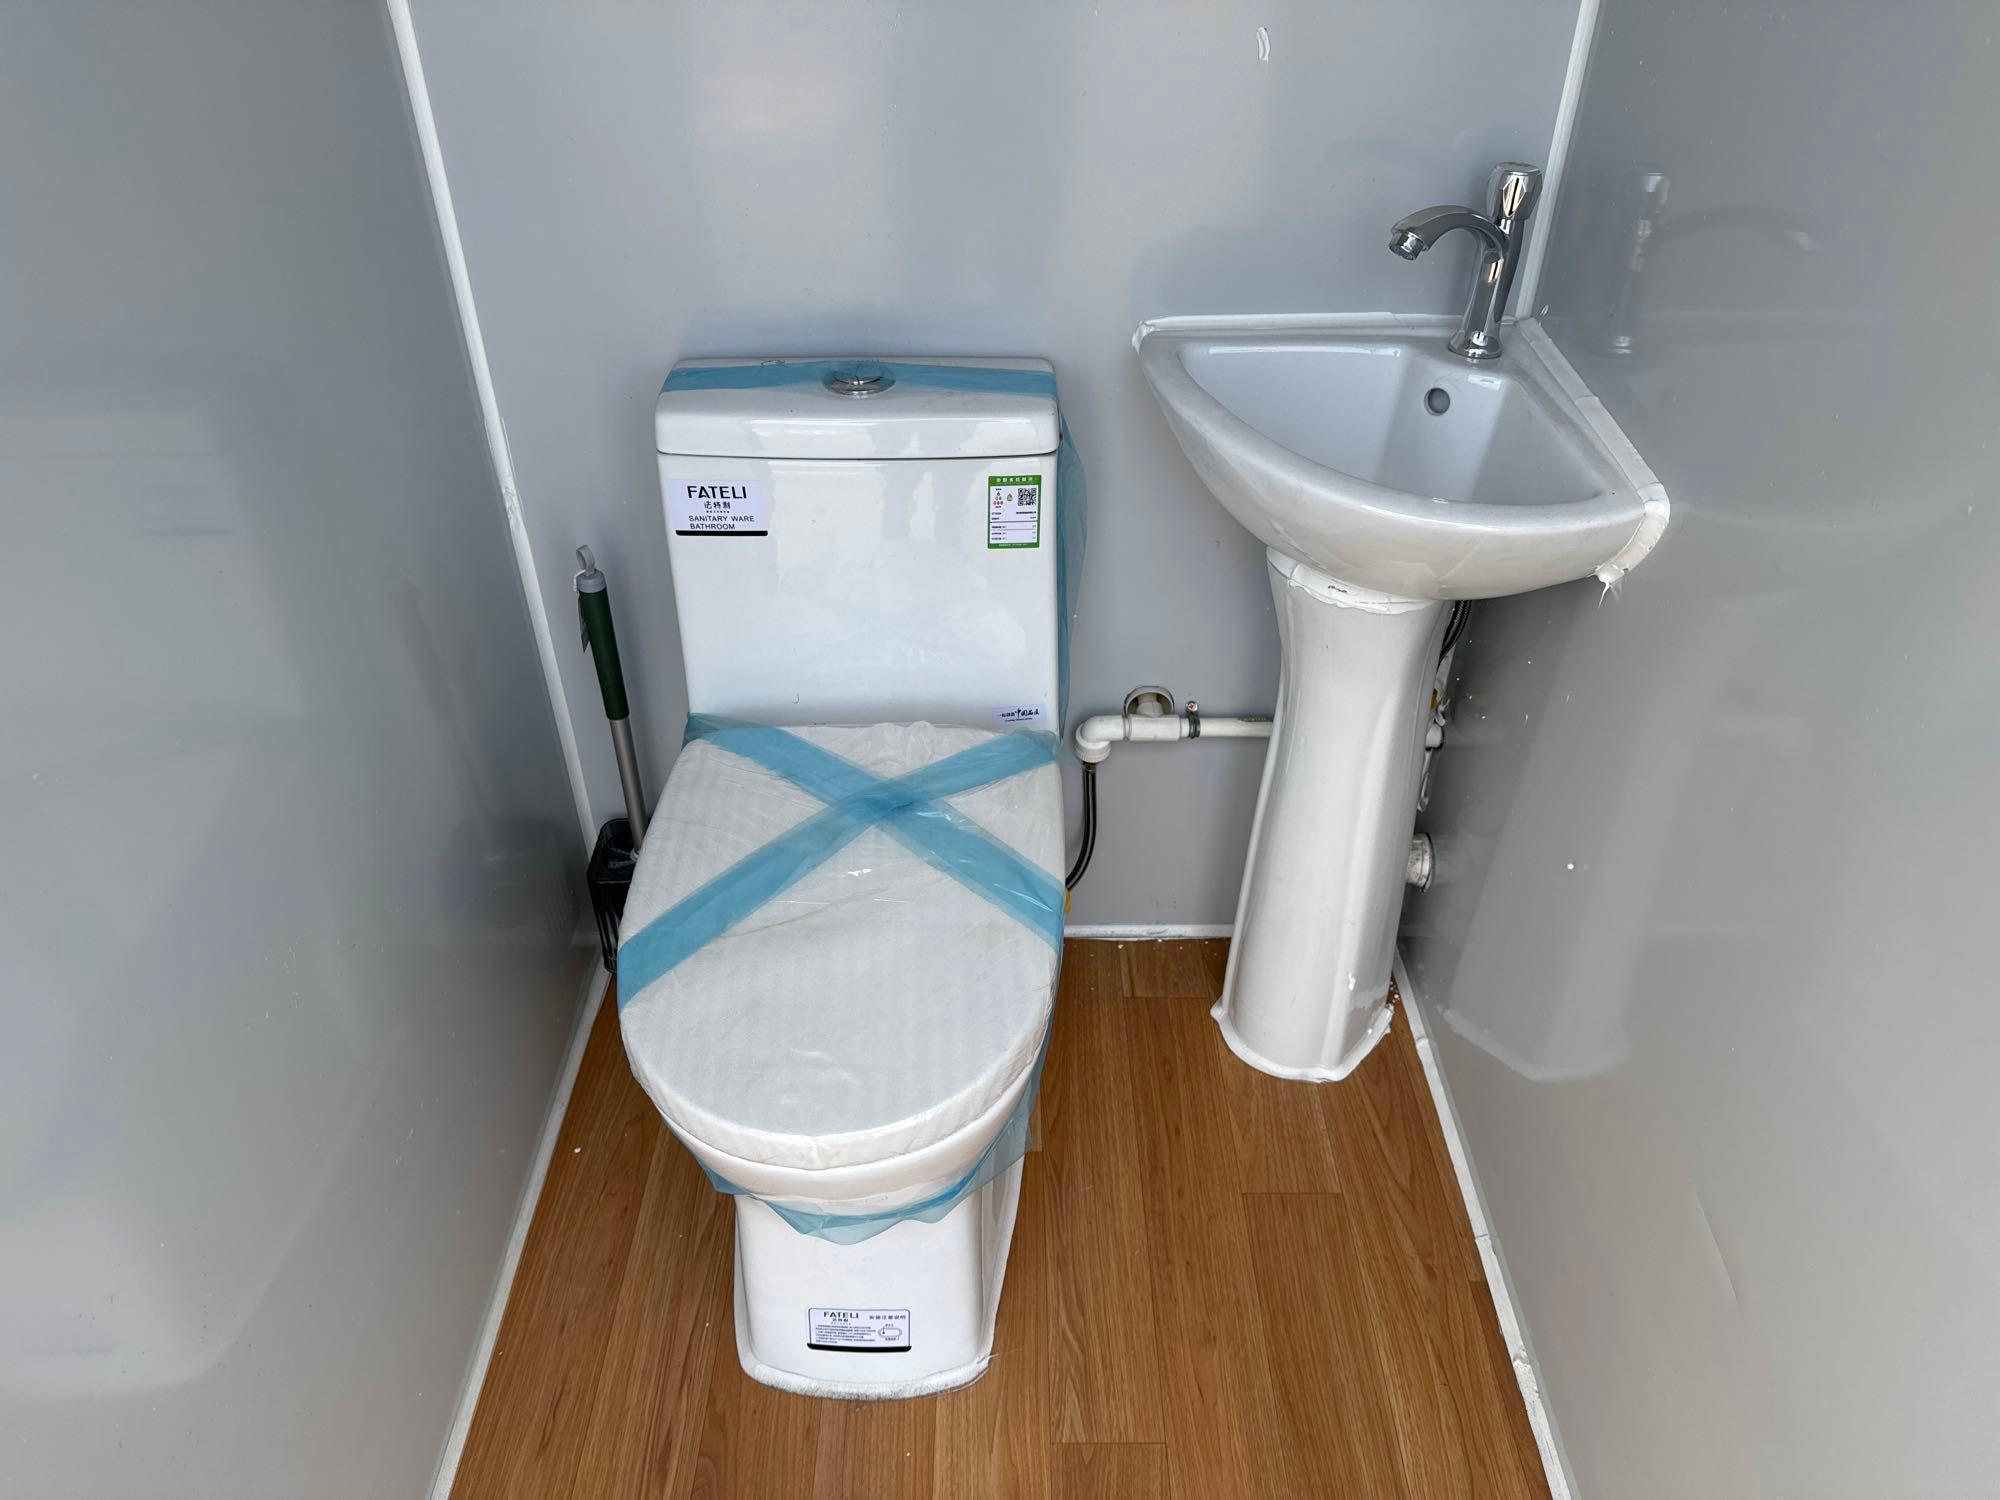 NEW/UNUSED Mobile Toilet